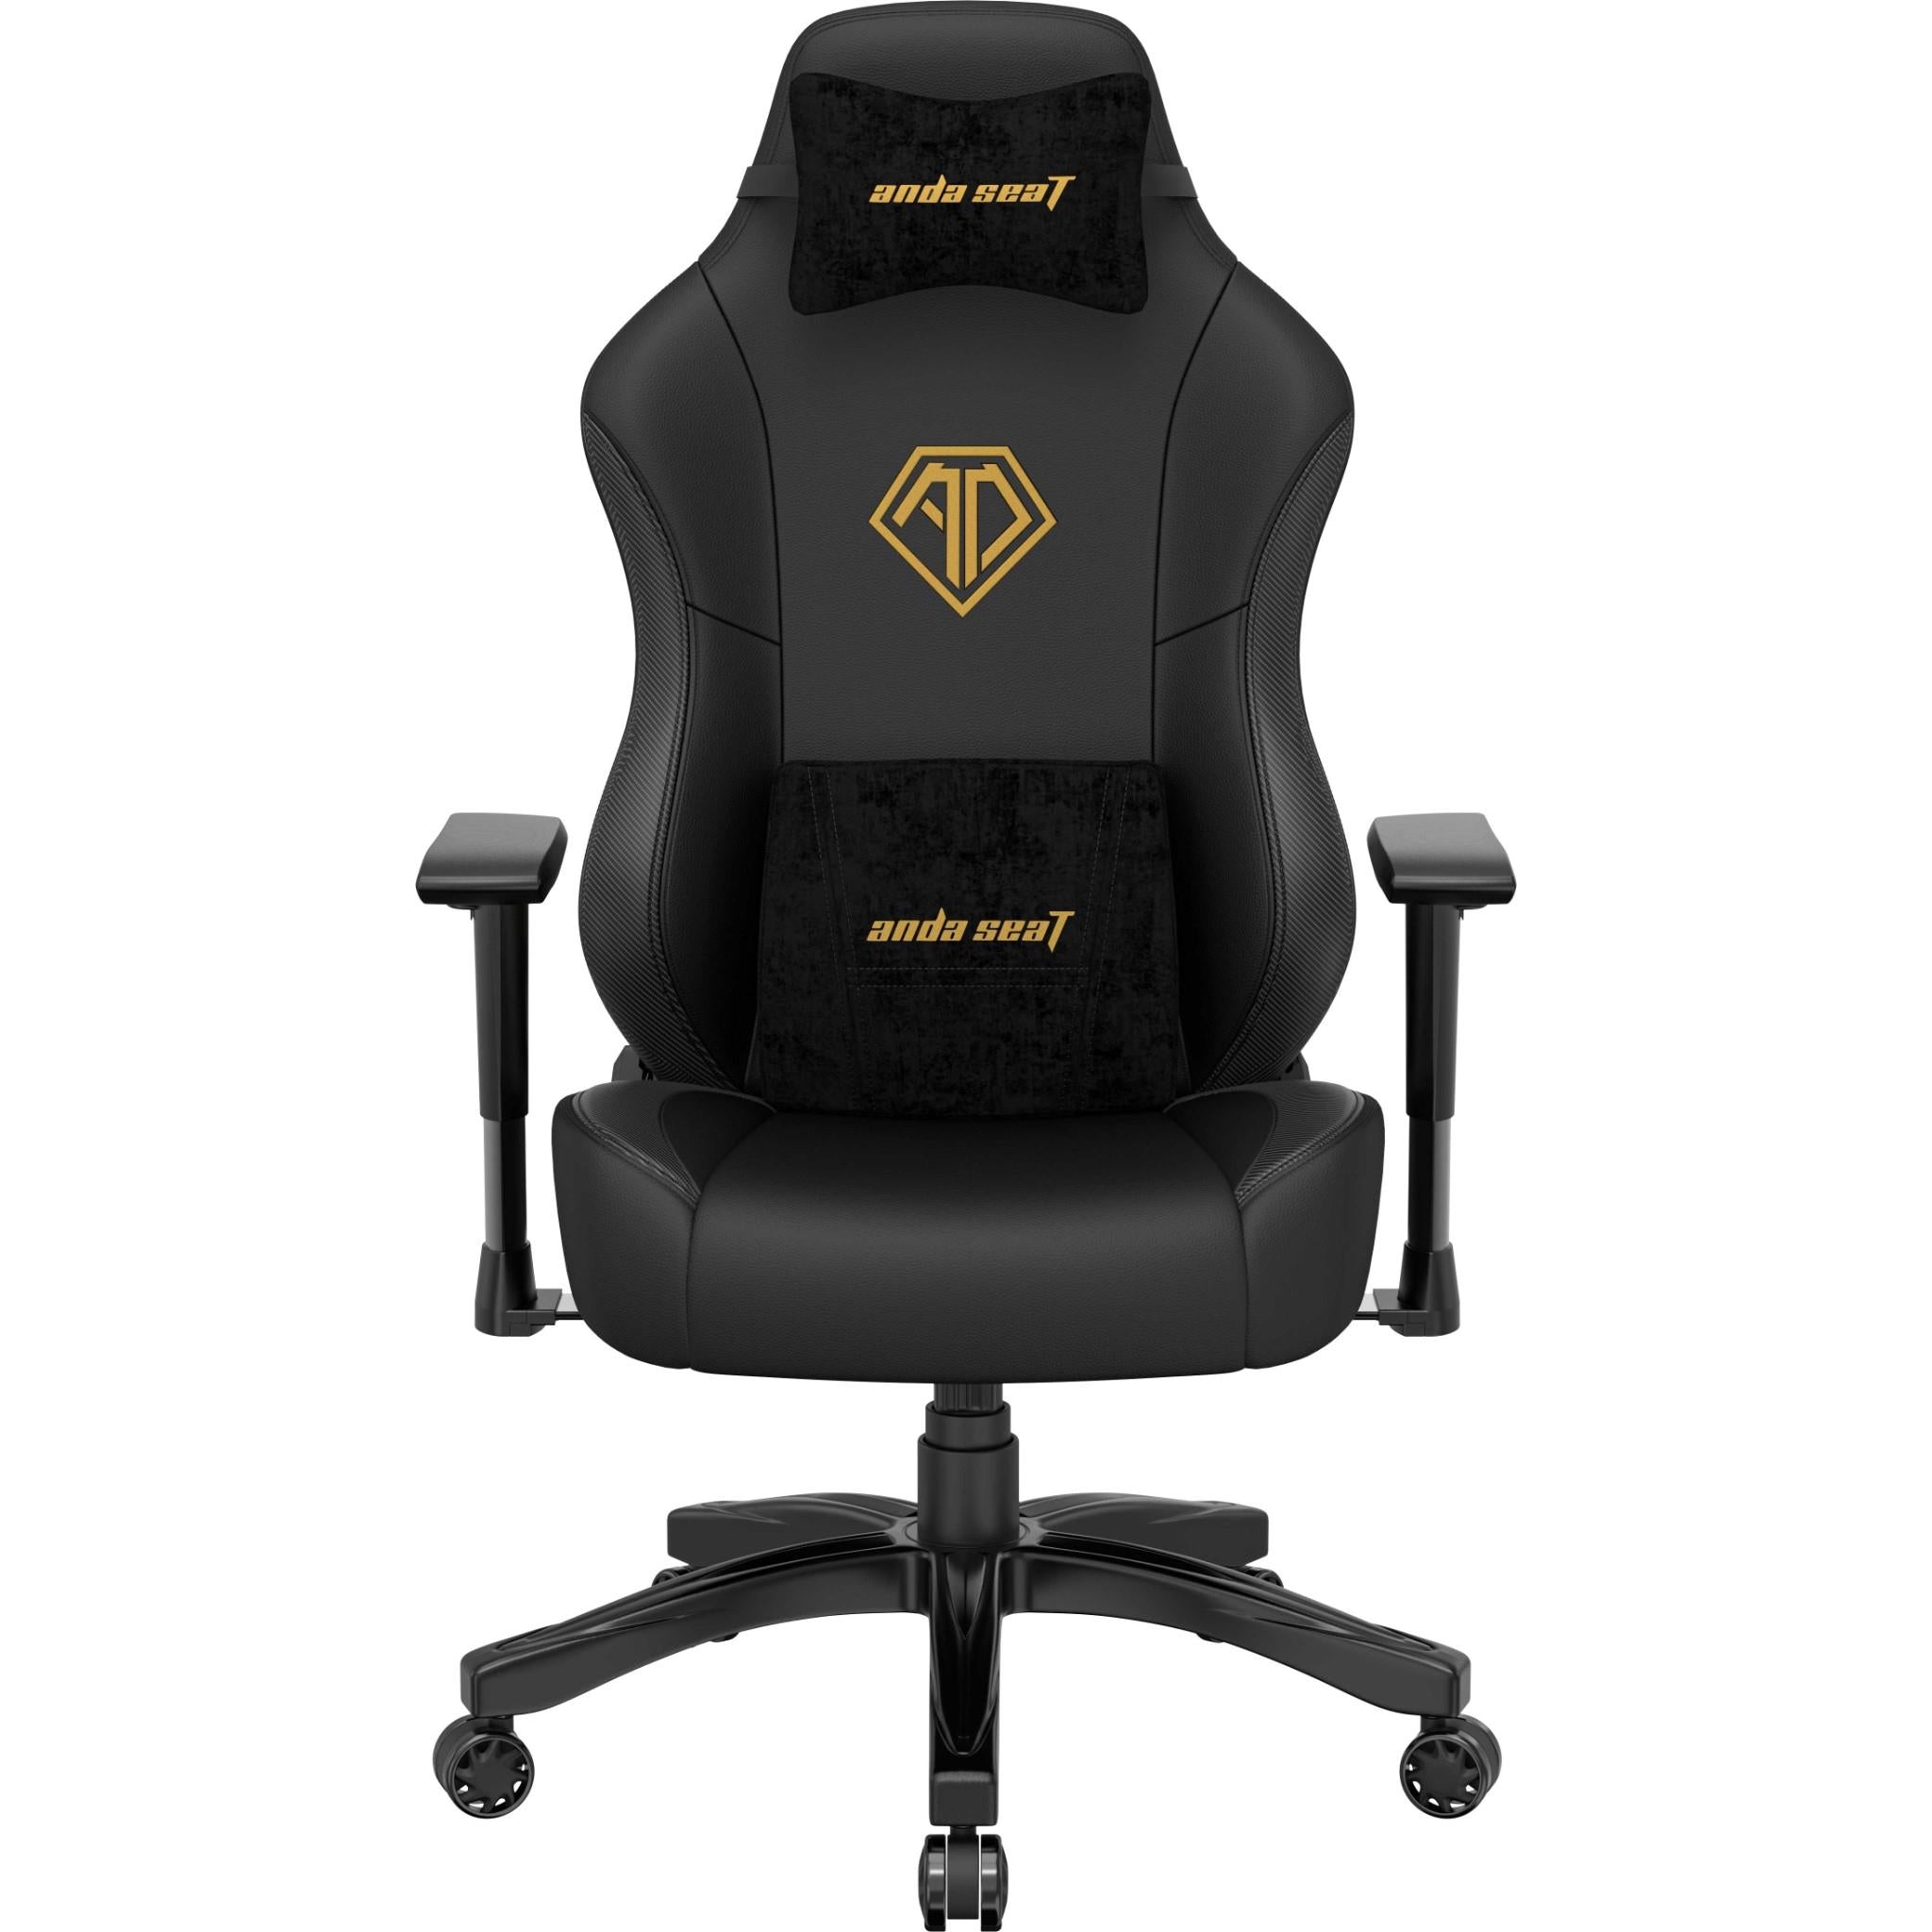 anda seat phantom 3 gaming chair black (large)